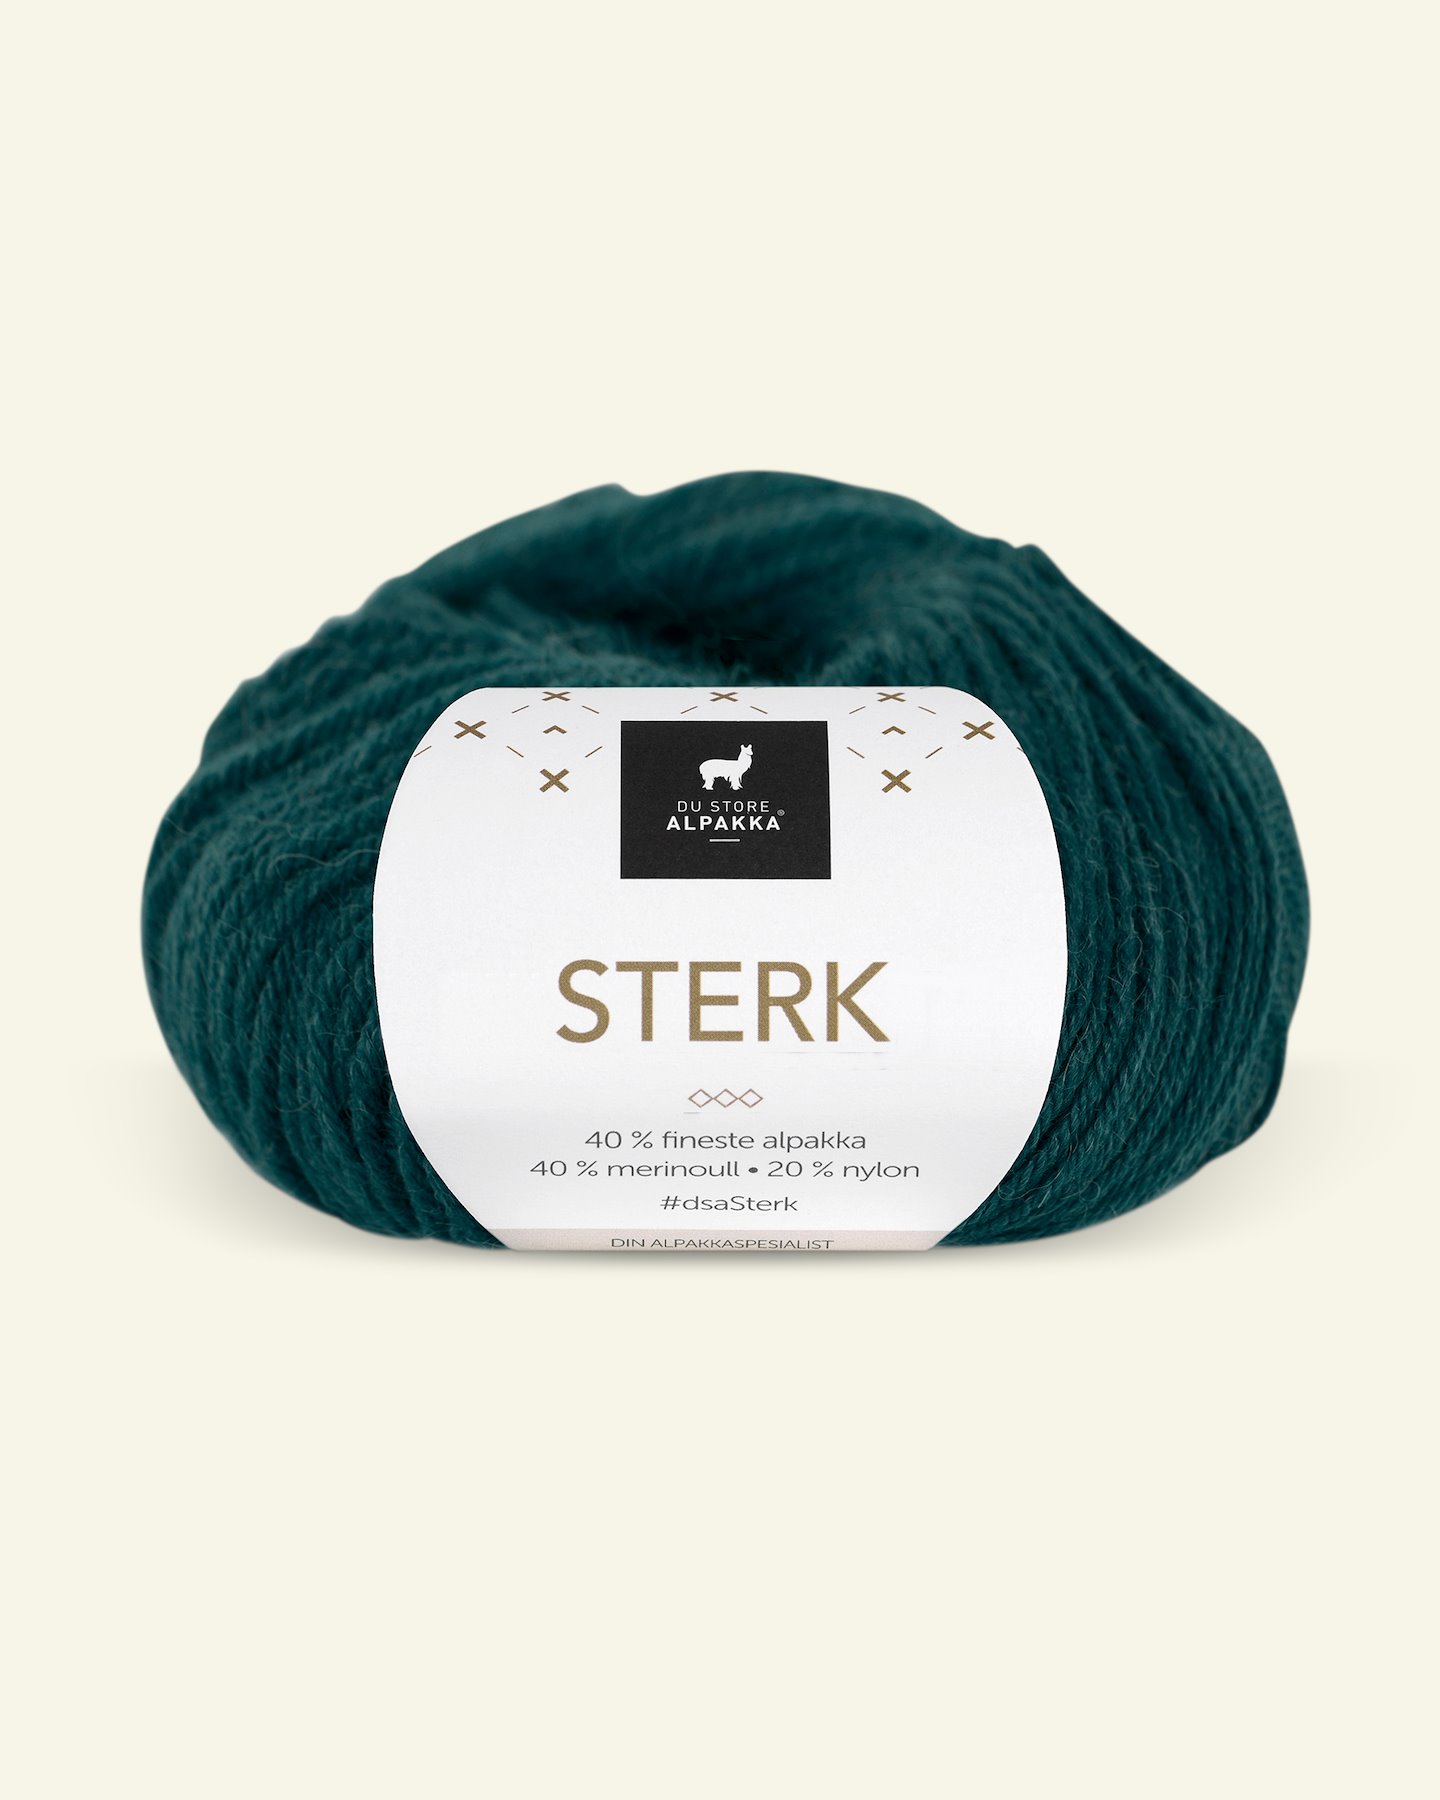 Du Store Alpakka, alpaca merino mixed yarn "Sterk", spruce green (906) 90000698_pack